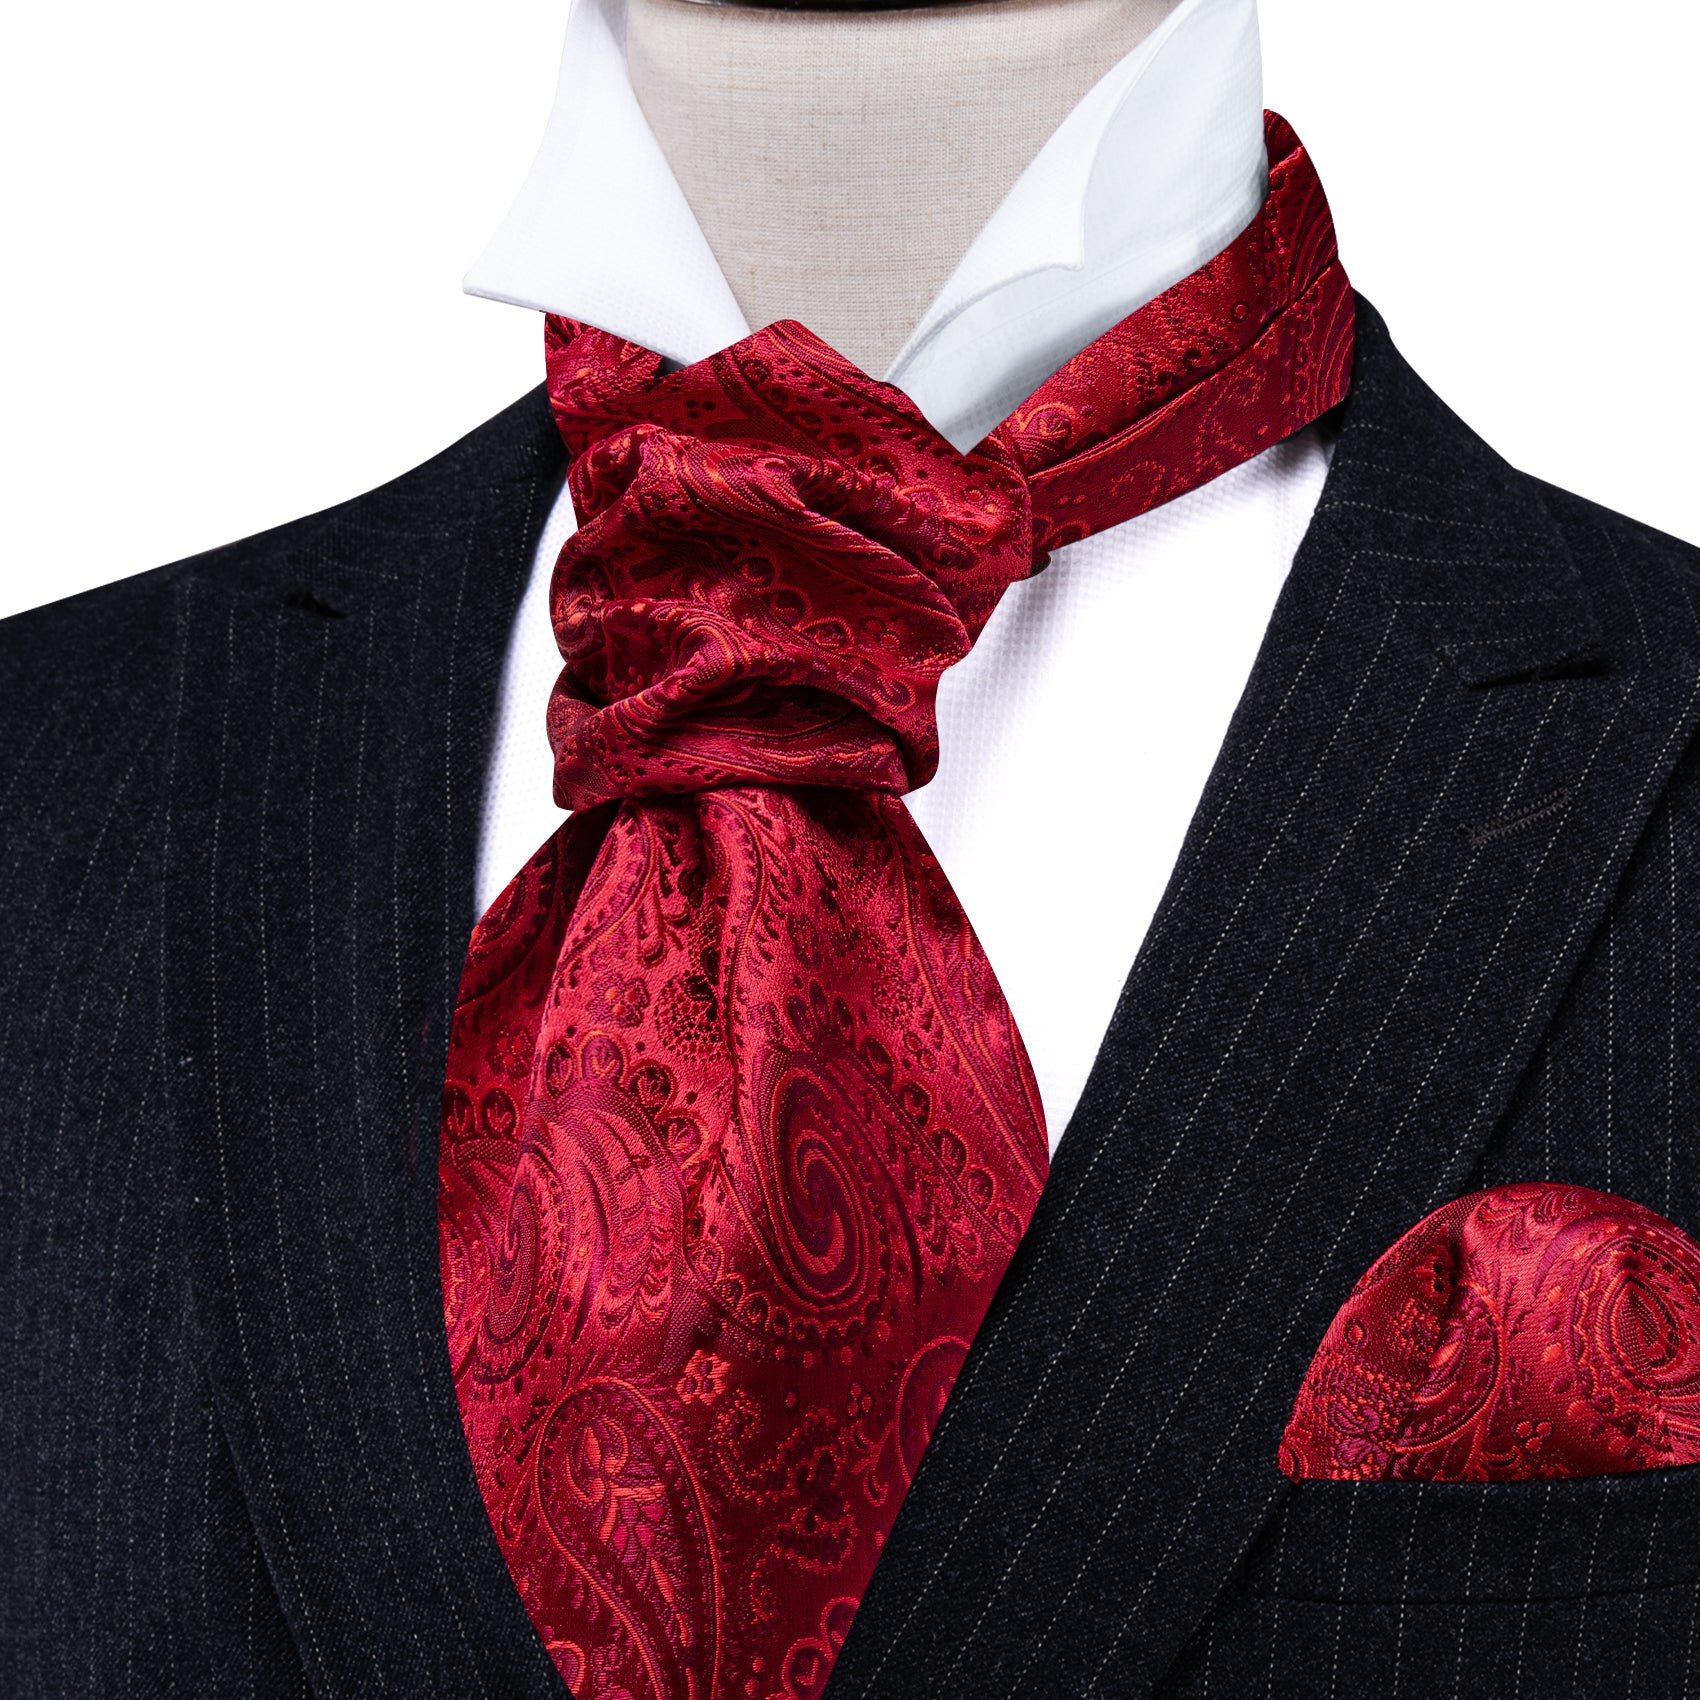 Barry.wang Red Tie Paisley Silk Men's Ascot Handkerchief Cufflinks for Wedding